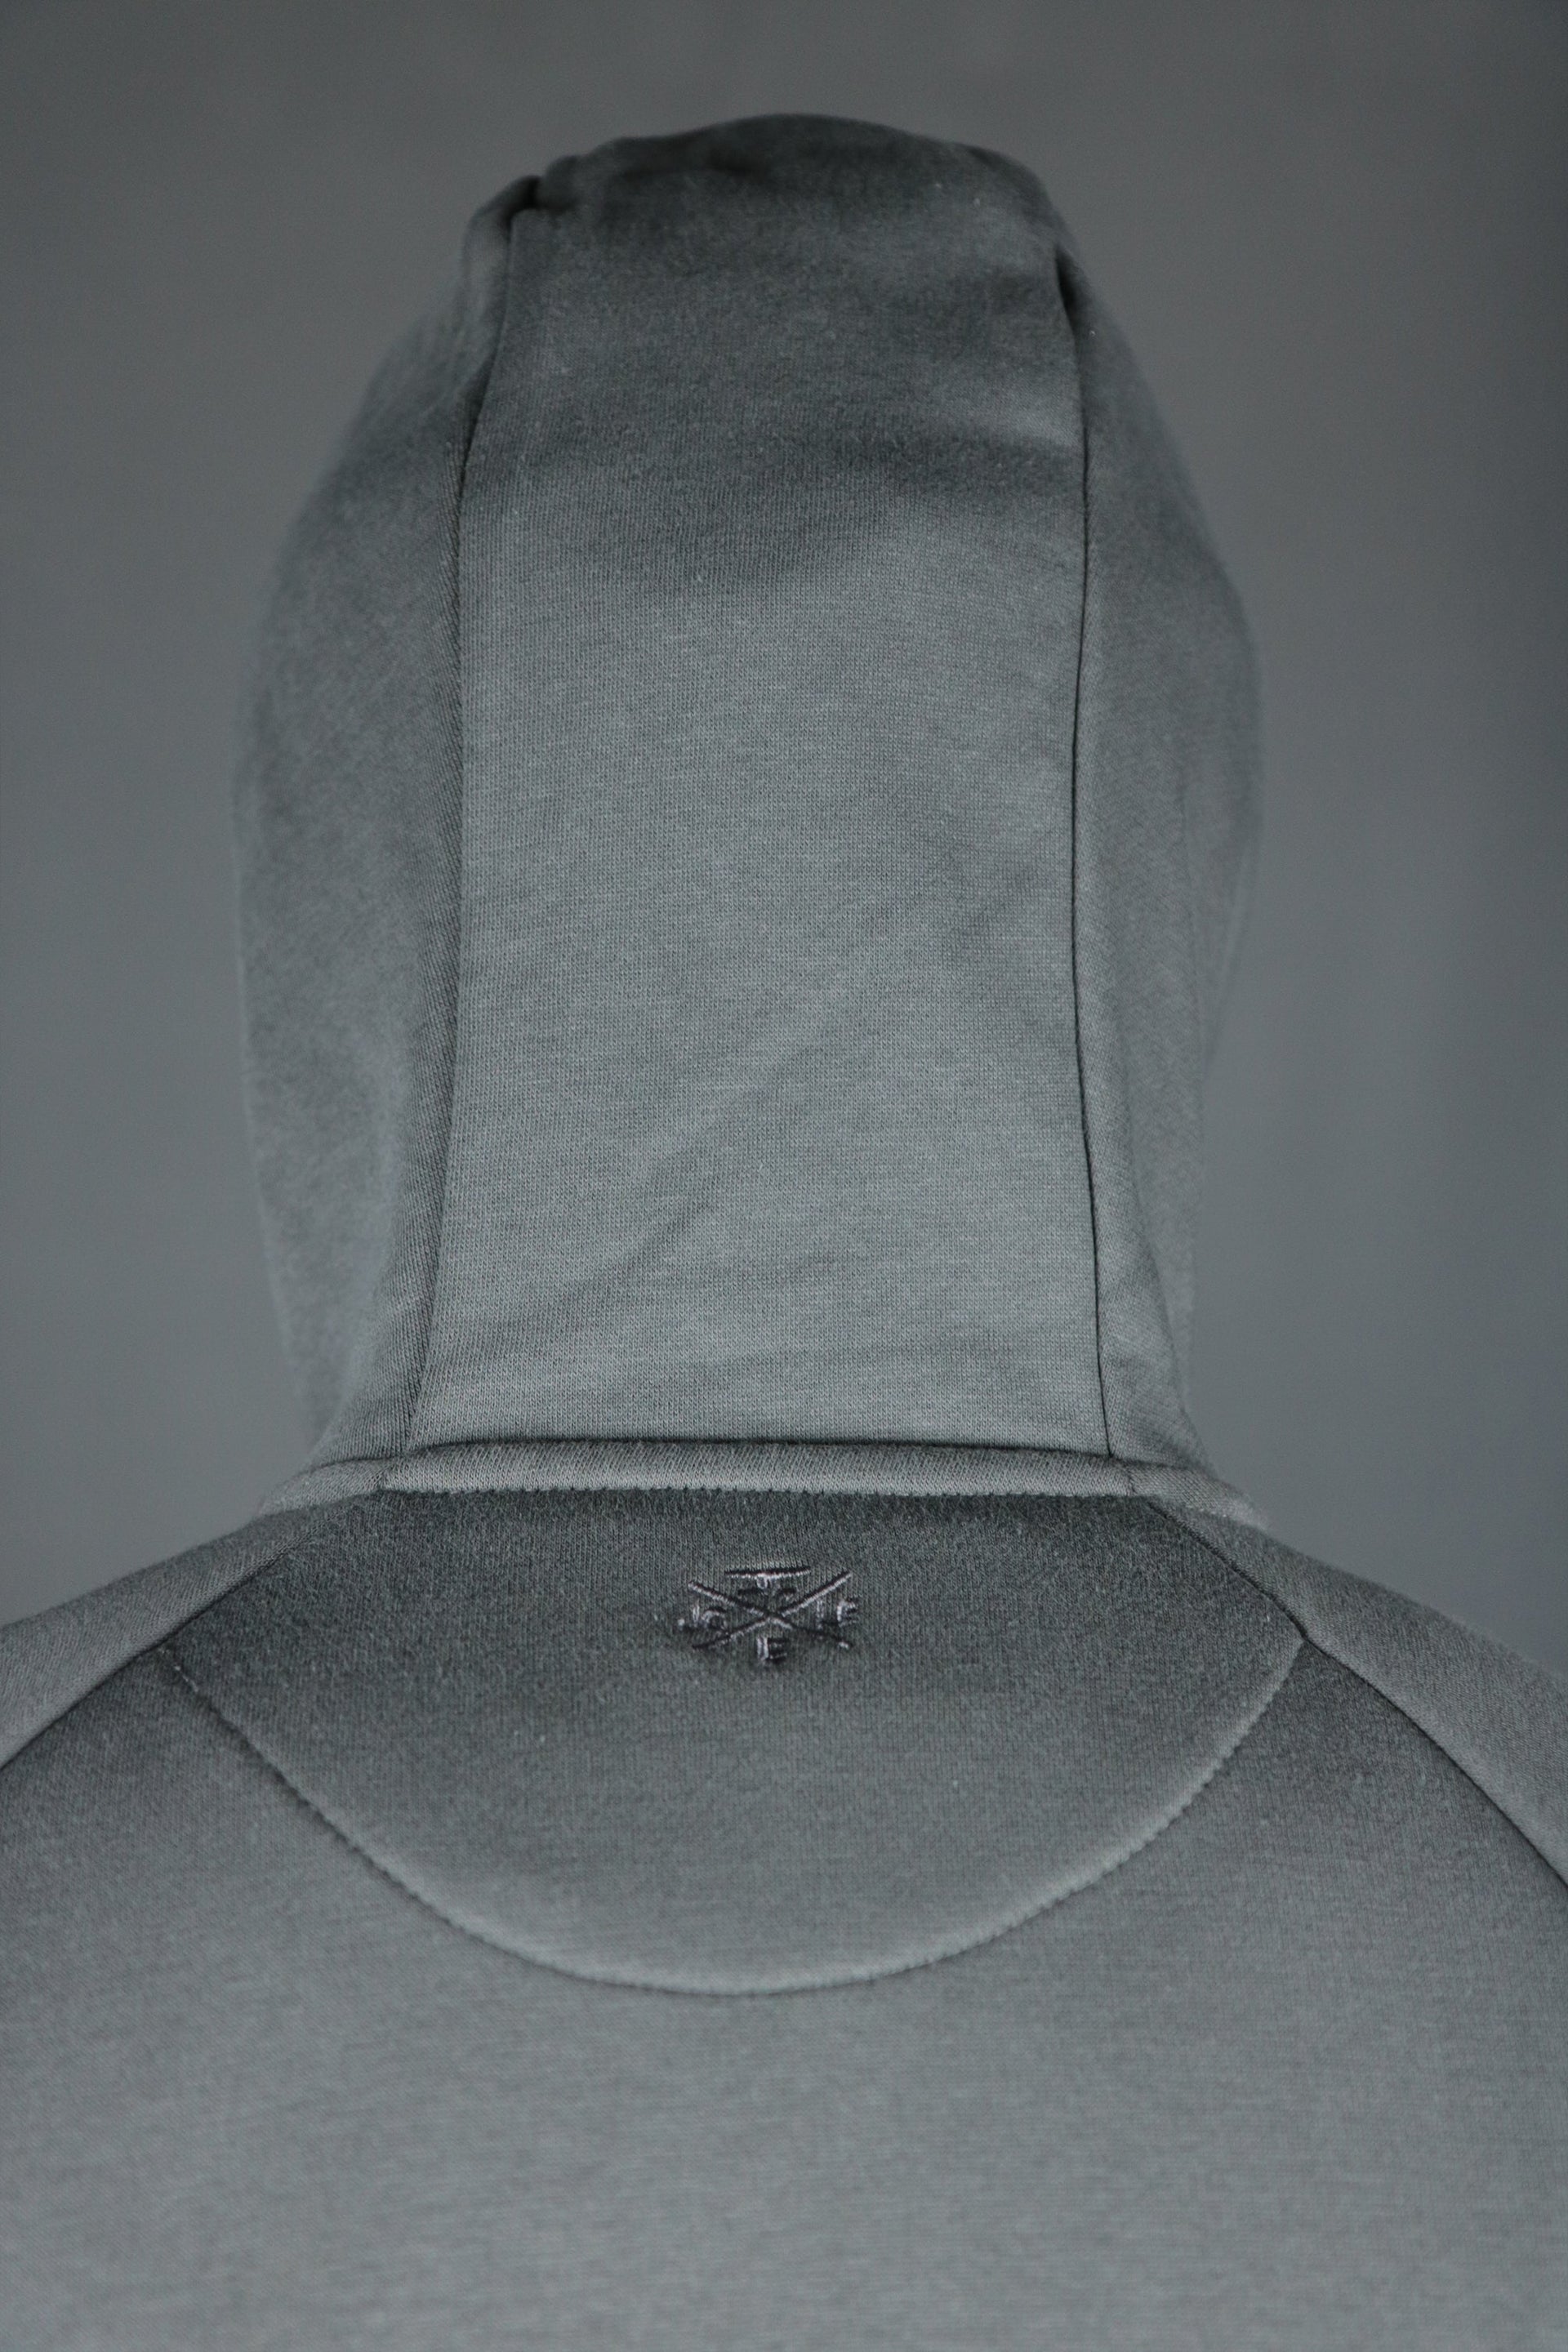 The back side of the Jordan Craig basic tech fleece hoodie.